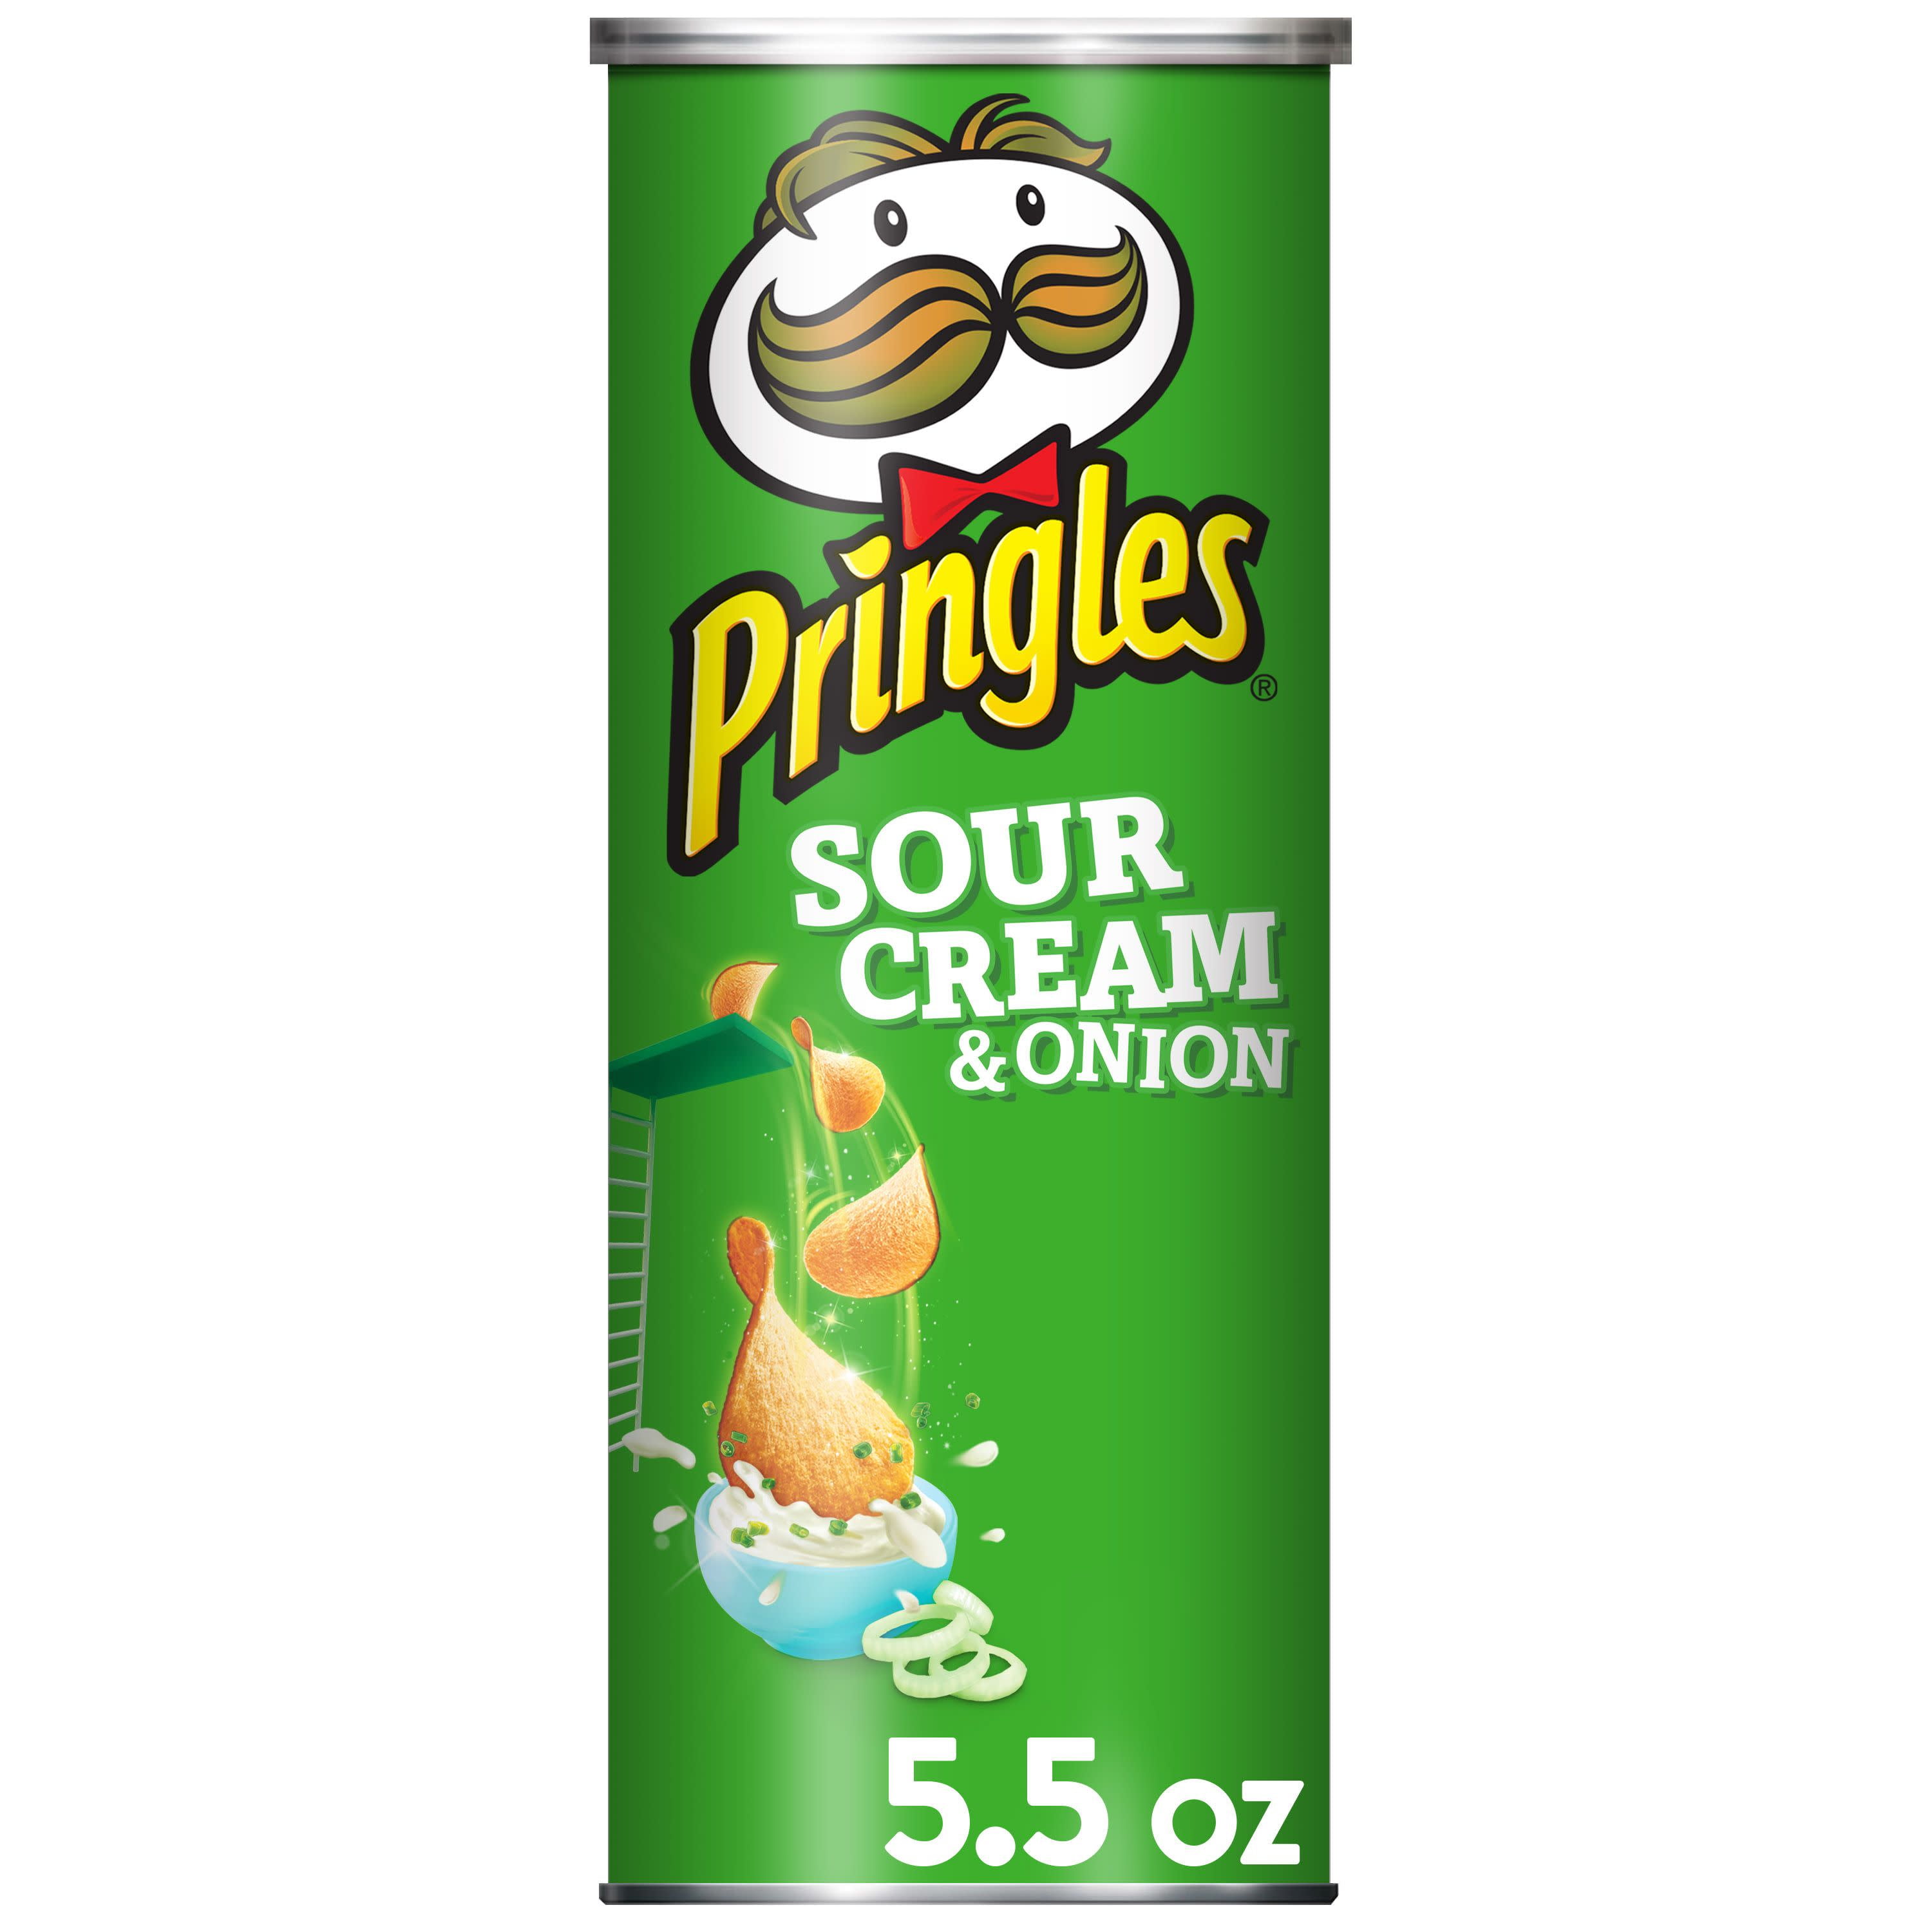 Pringles, Potato Crisps Chips, Sour Cream & Onion Flavored, 5.5 Oz ...